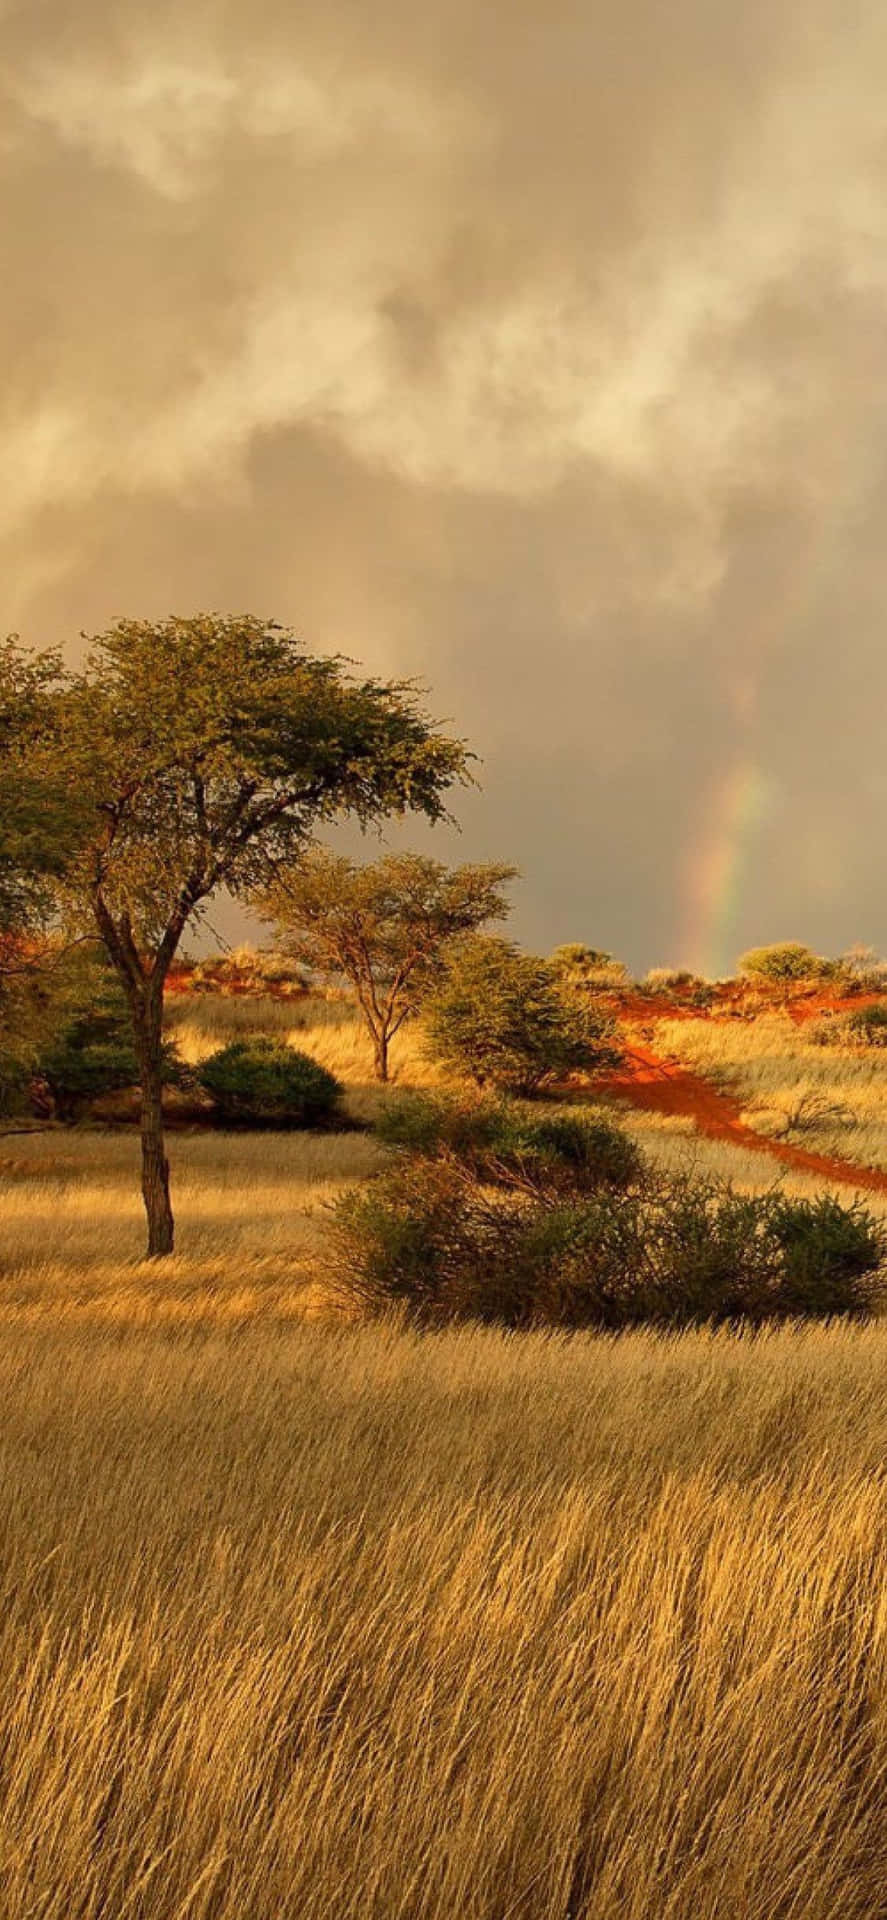 Caption: Majestic African Landscape on iPhone X